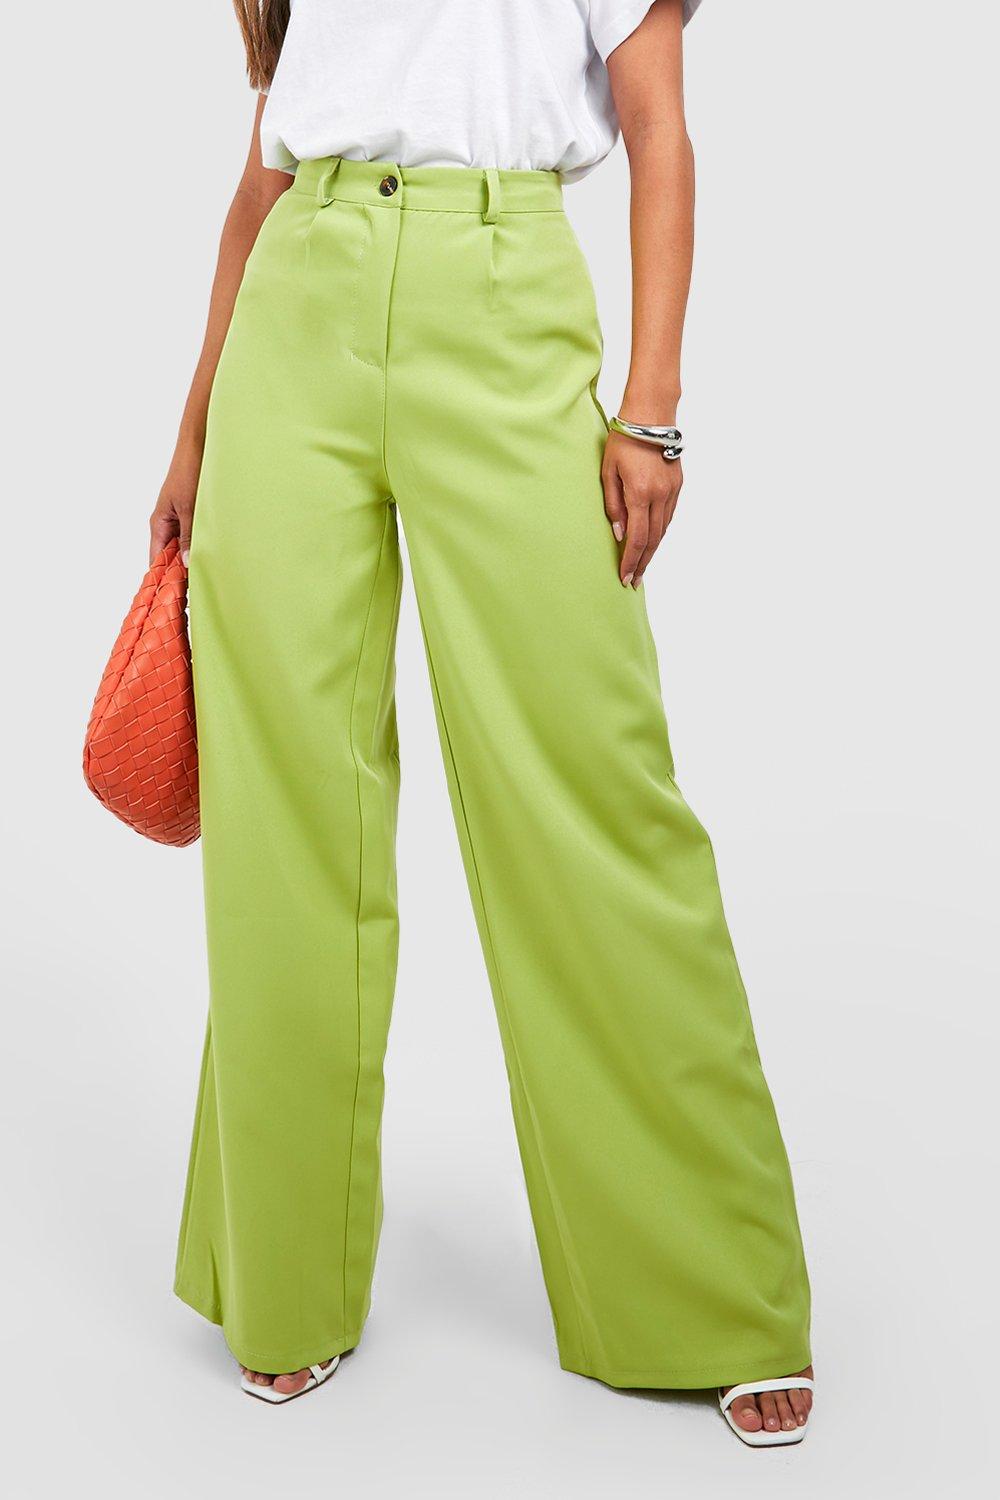 Women's Pants Solid High Waist Wide Leg Pants Lime Green XS